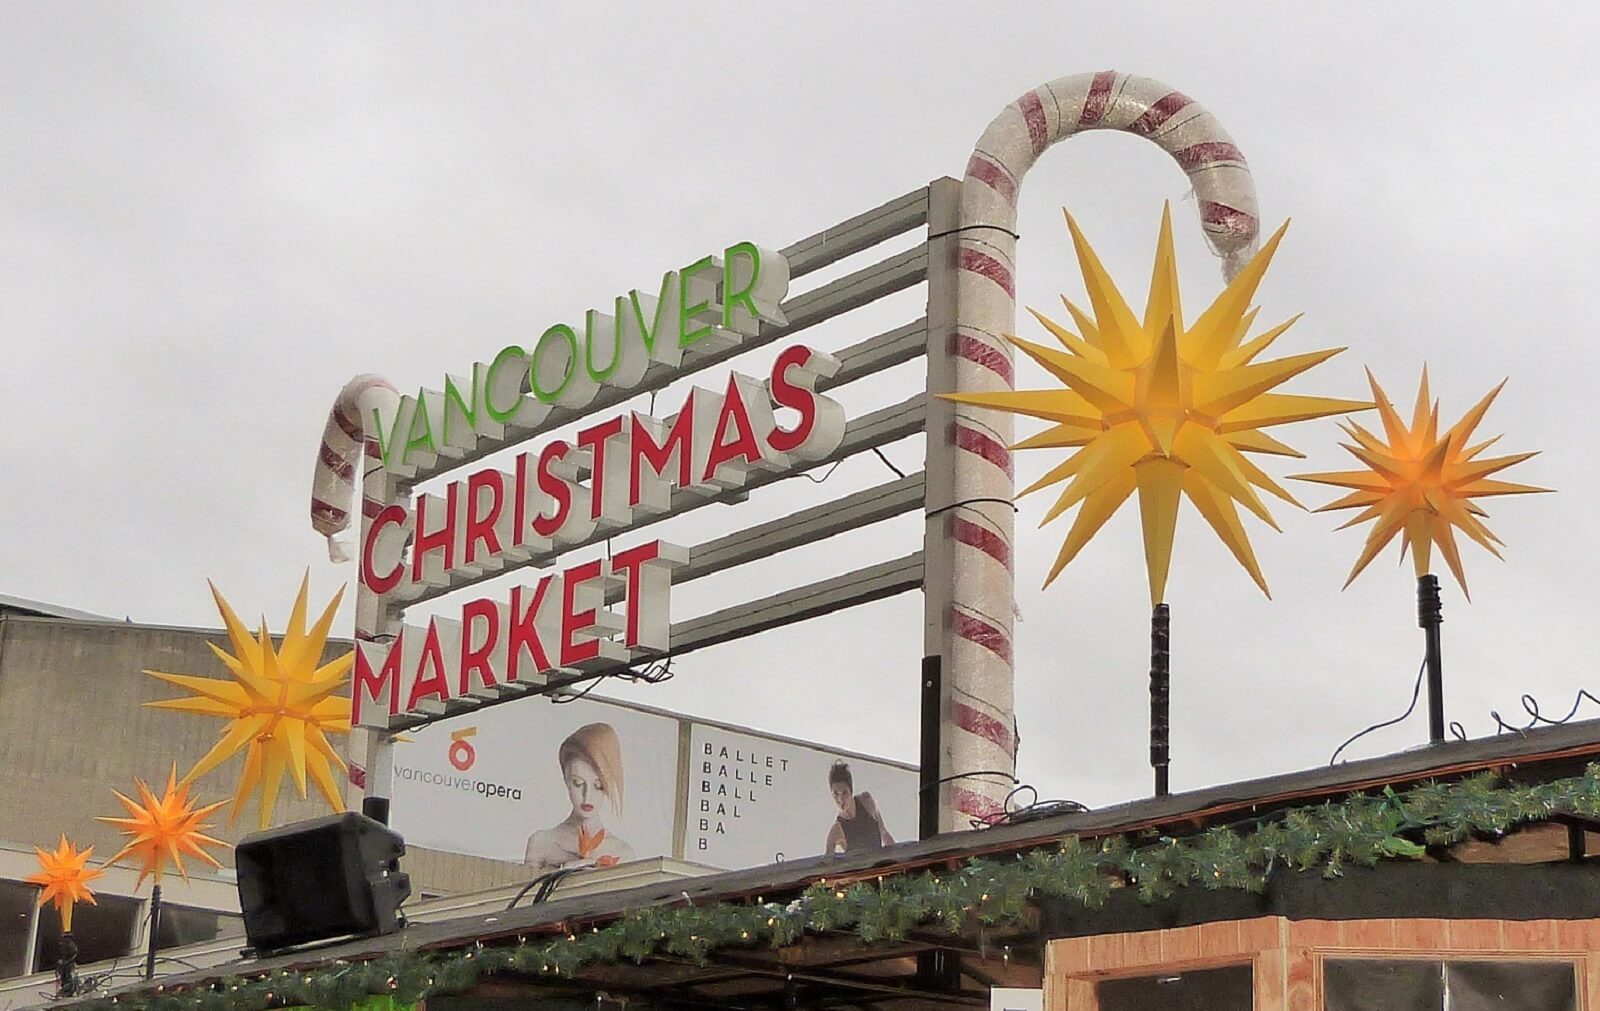 Vancouver Christmas Market 2015